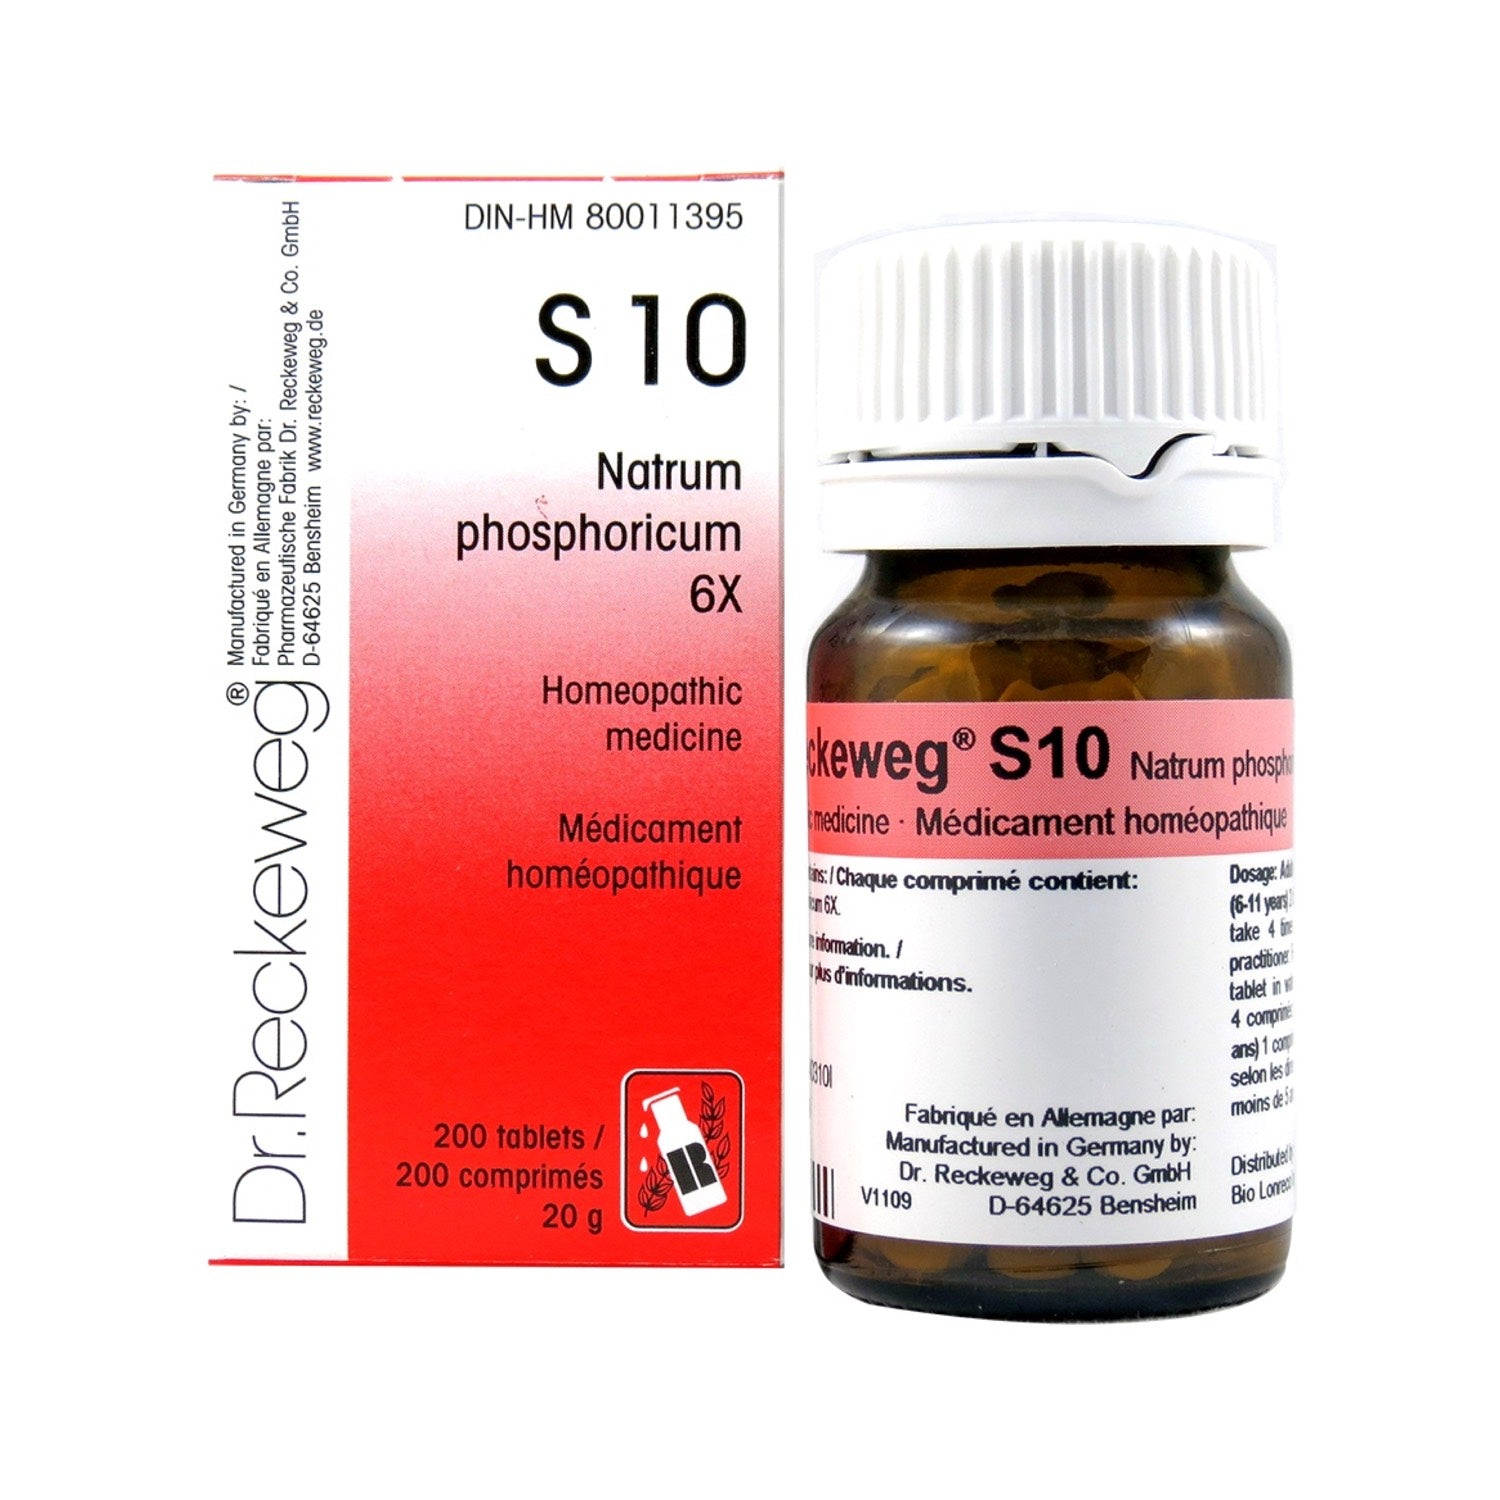 S10 Natrum phosphoricum Homeopathic medicine Schuessler salt 6X 200 tablets (20 g) - iwellnessbox